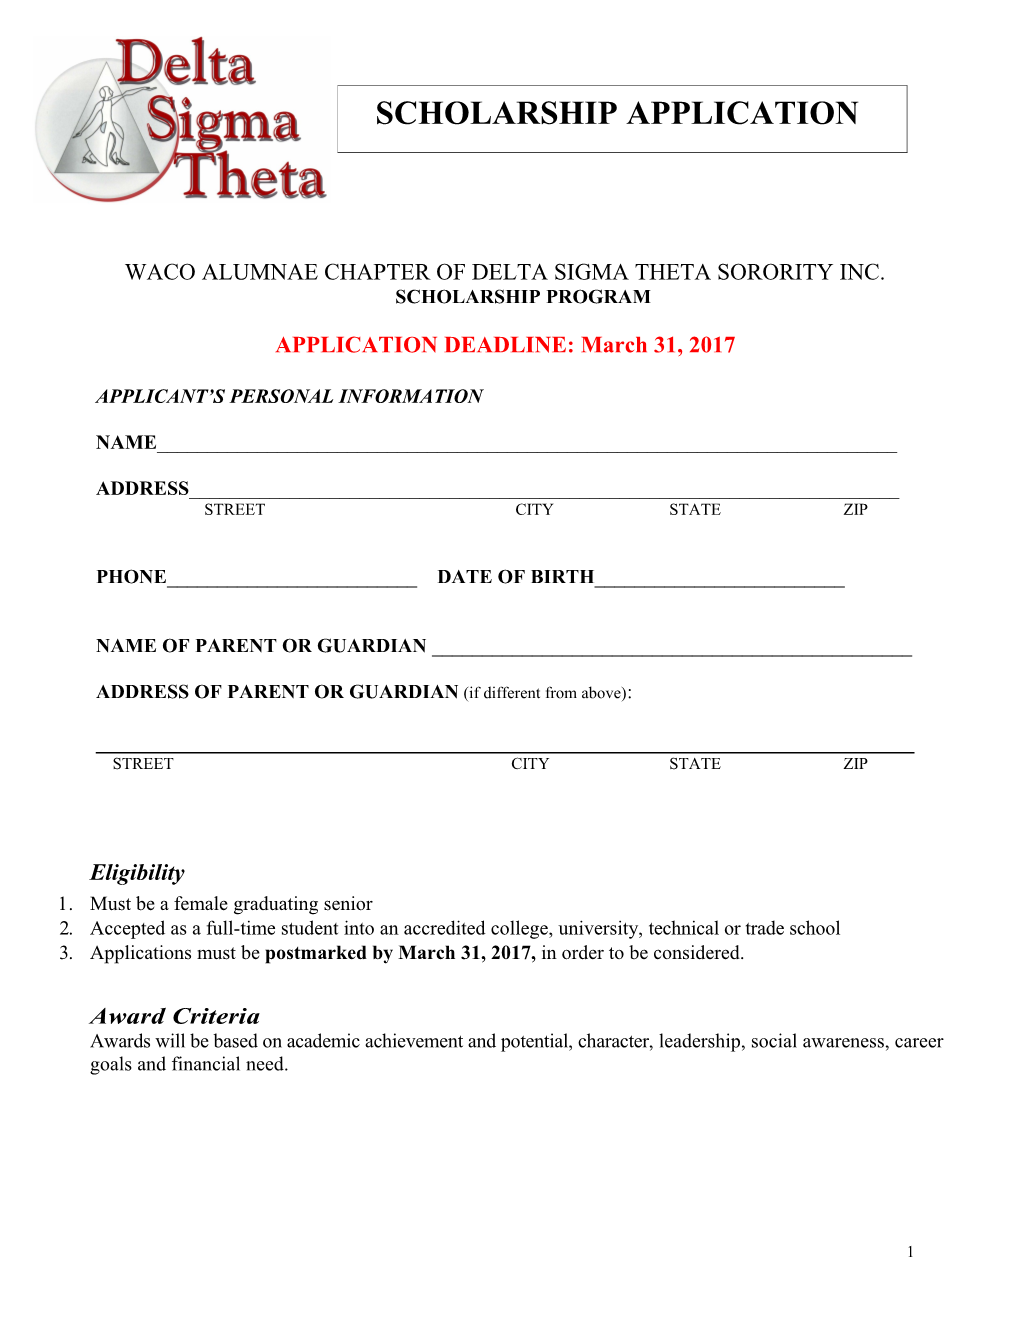 Waco Alumnae Chapter of Delta Sigma Theta Sorority Inc. Scholarship Program